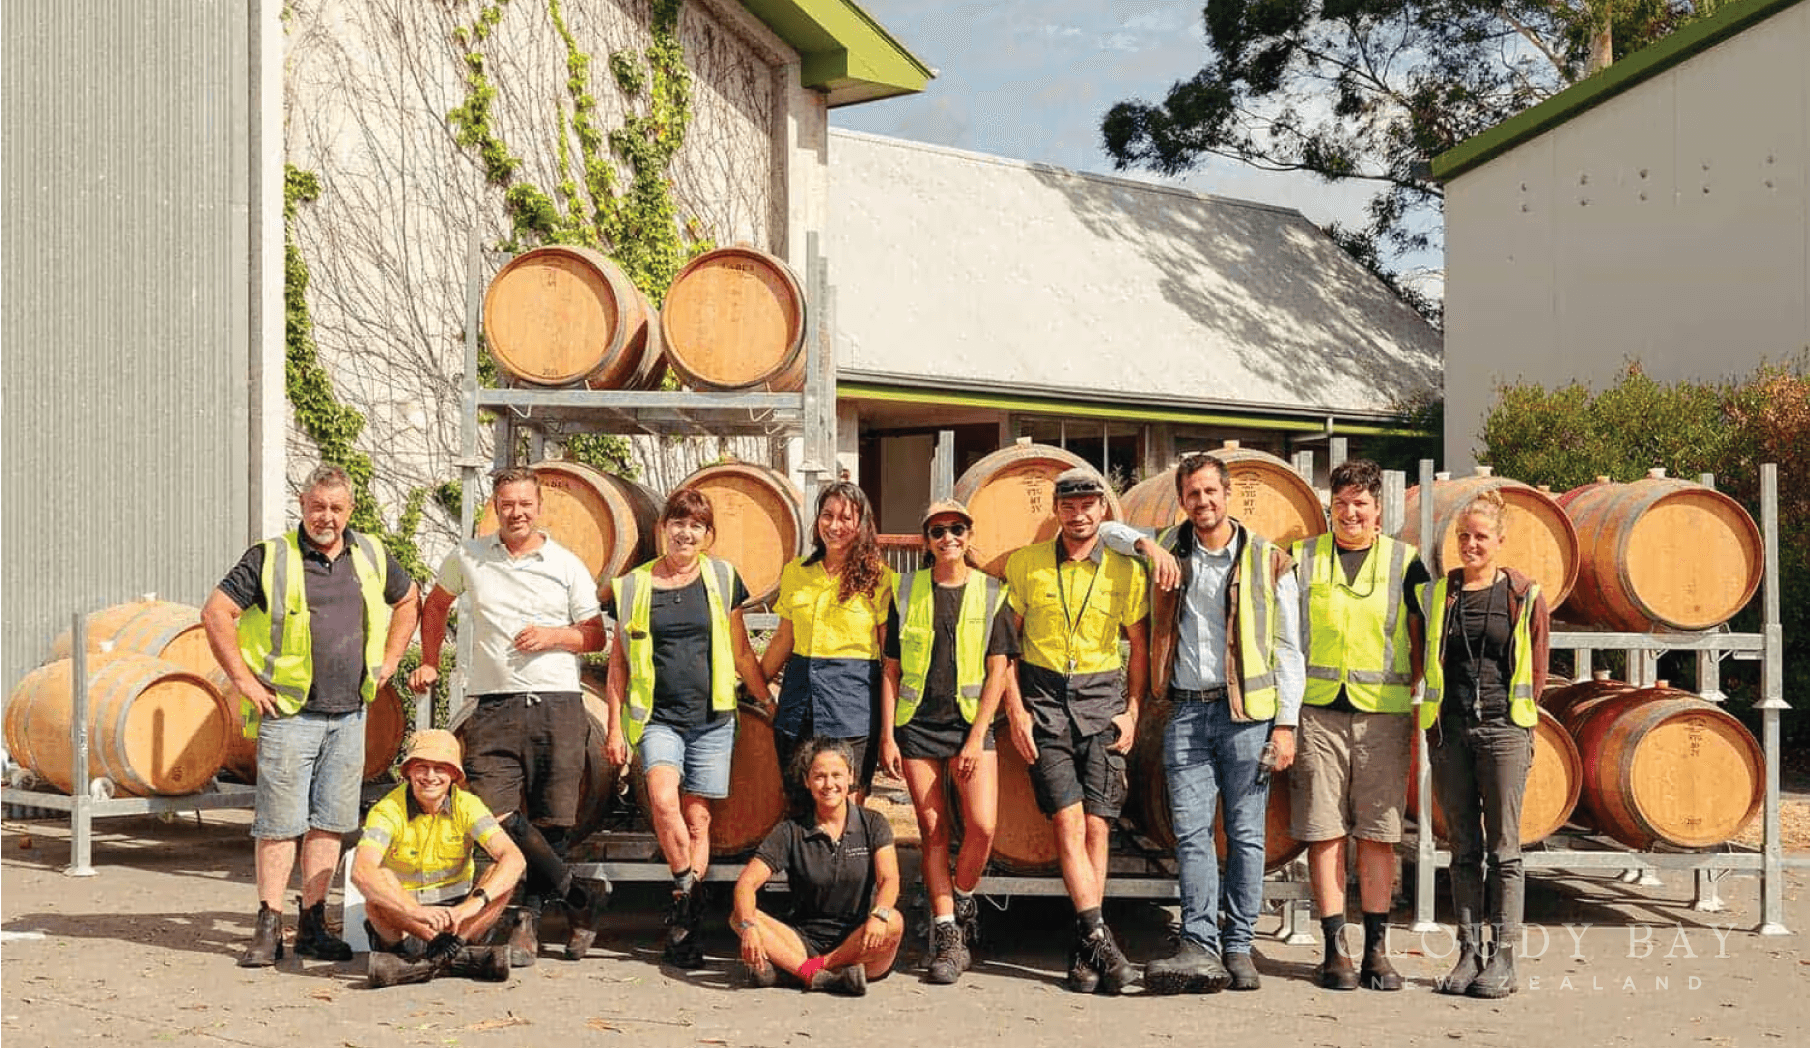 2018 Cloudy Bay Pinot Noir Te Wahi 750mL - Wally's Wine & Spirits